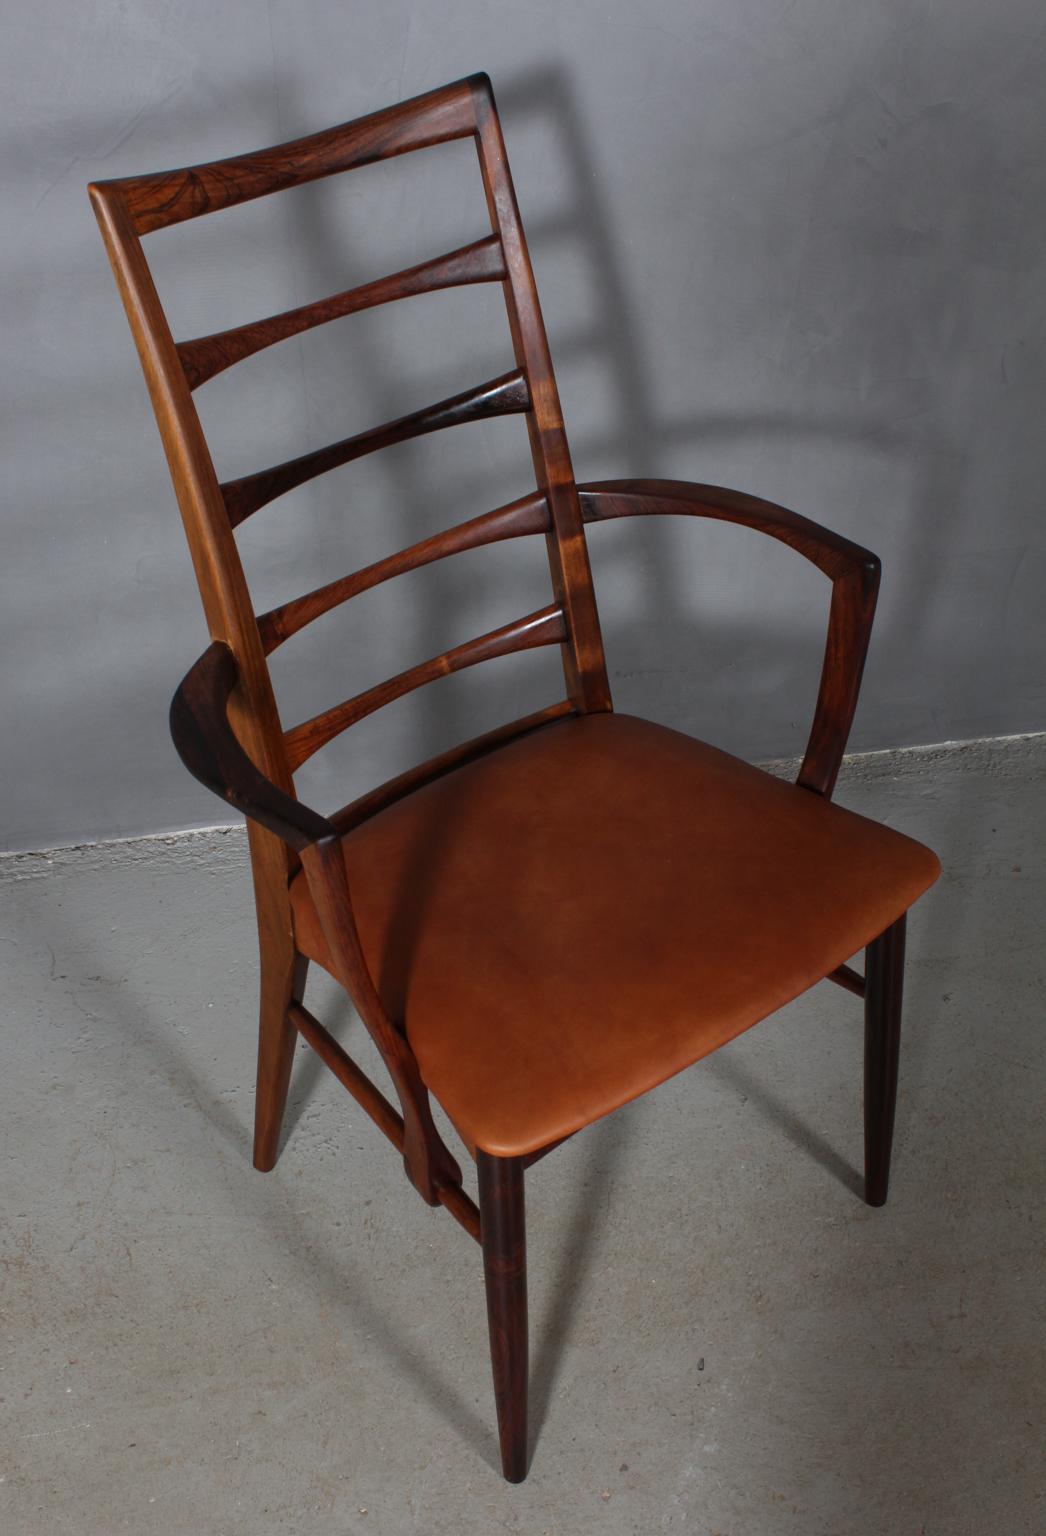 Niels Koefoed armchair made in solid rosewood.

New upholstered in vintage tan aniline leather.

Model Lis, made by Niels Koefoeds Møbelfabrik Hornslet, 1960s.
   
 